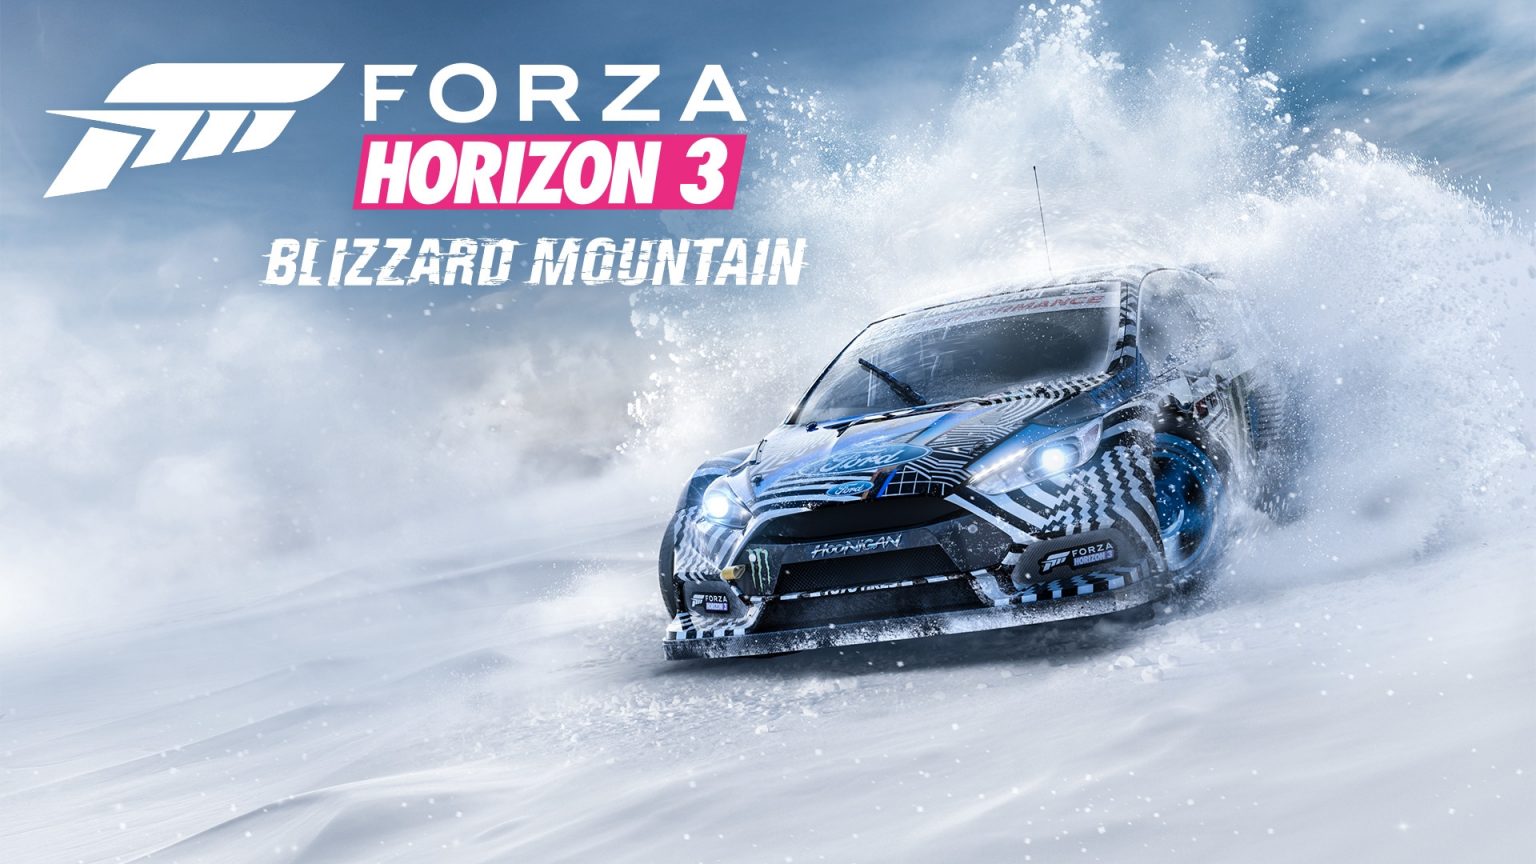 Forza horizon 5 full game crack download